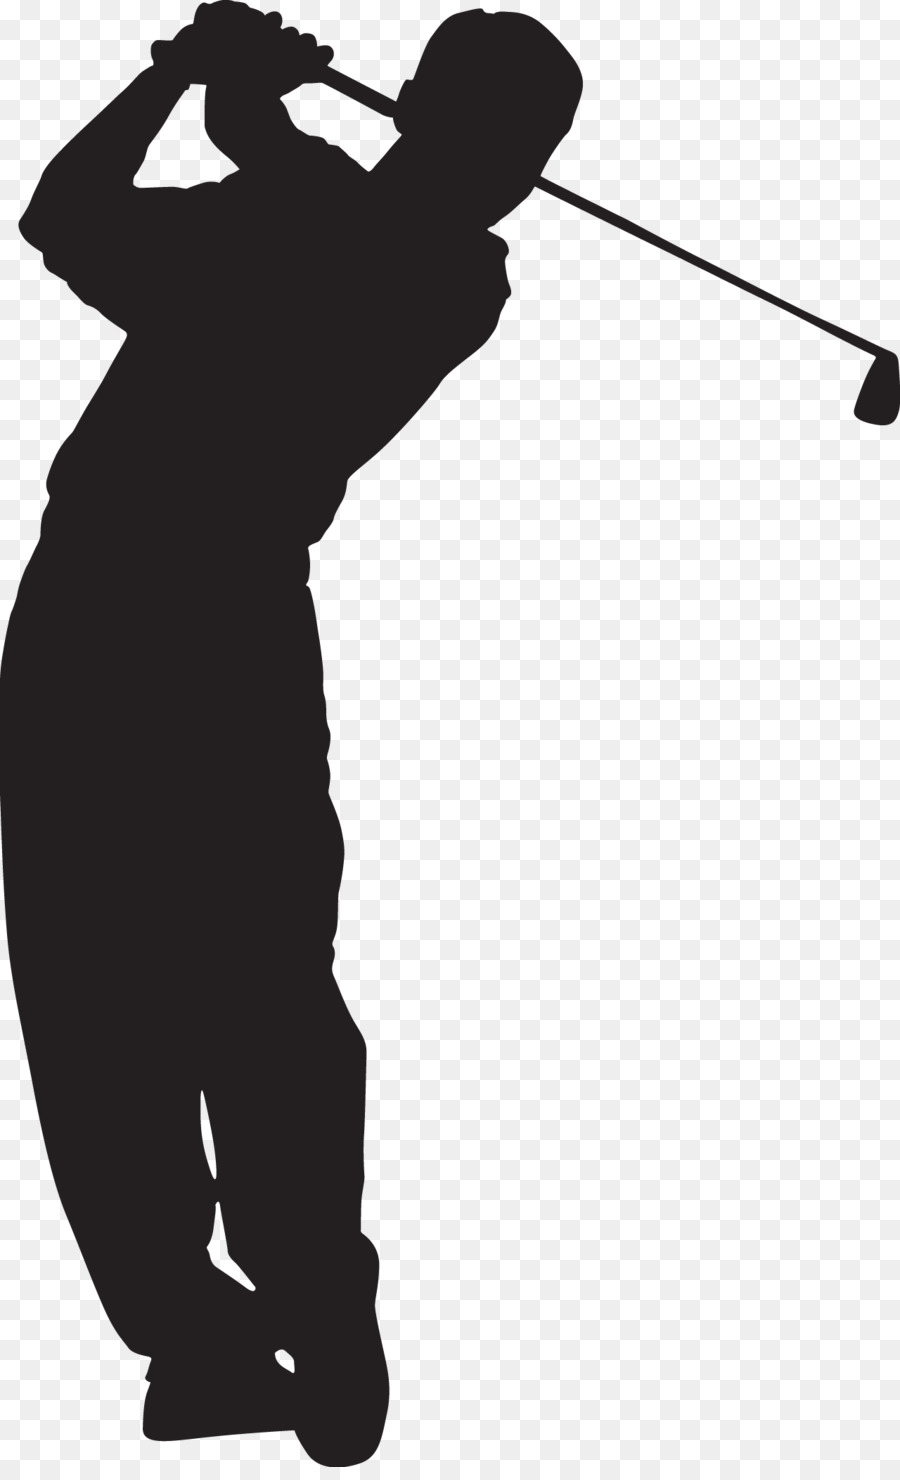 Professional golfer ??????? Golf Balls - Golf png download - 1280*2087 - Free Transparent Golf png Download.